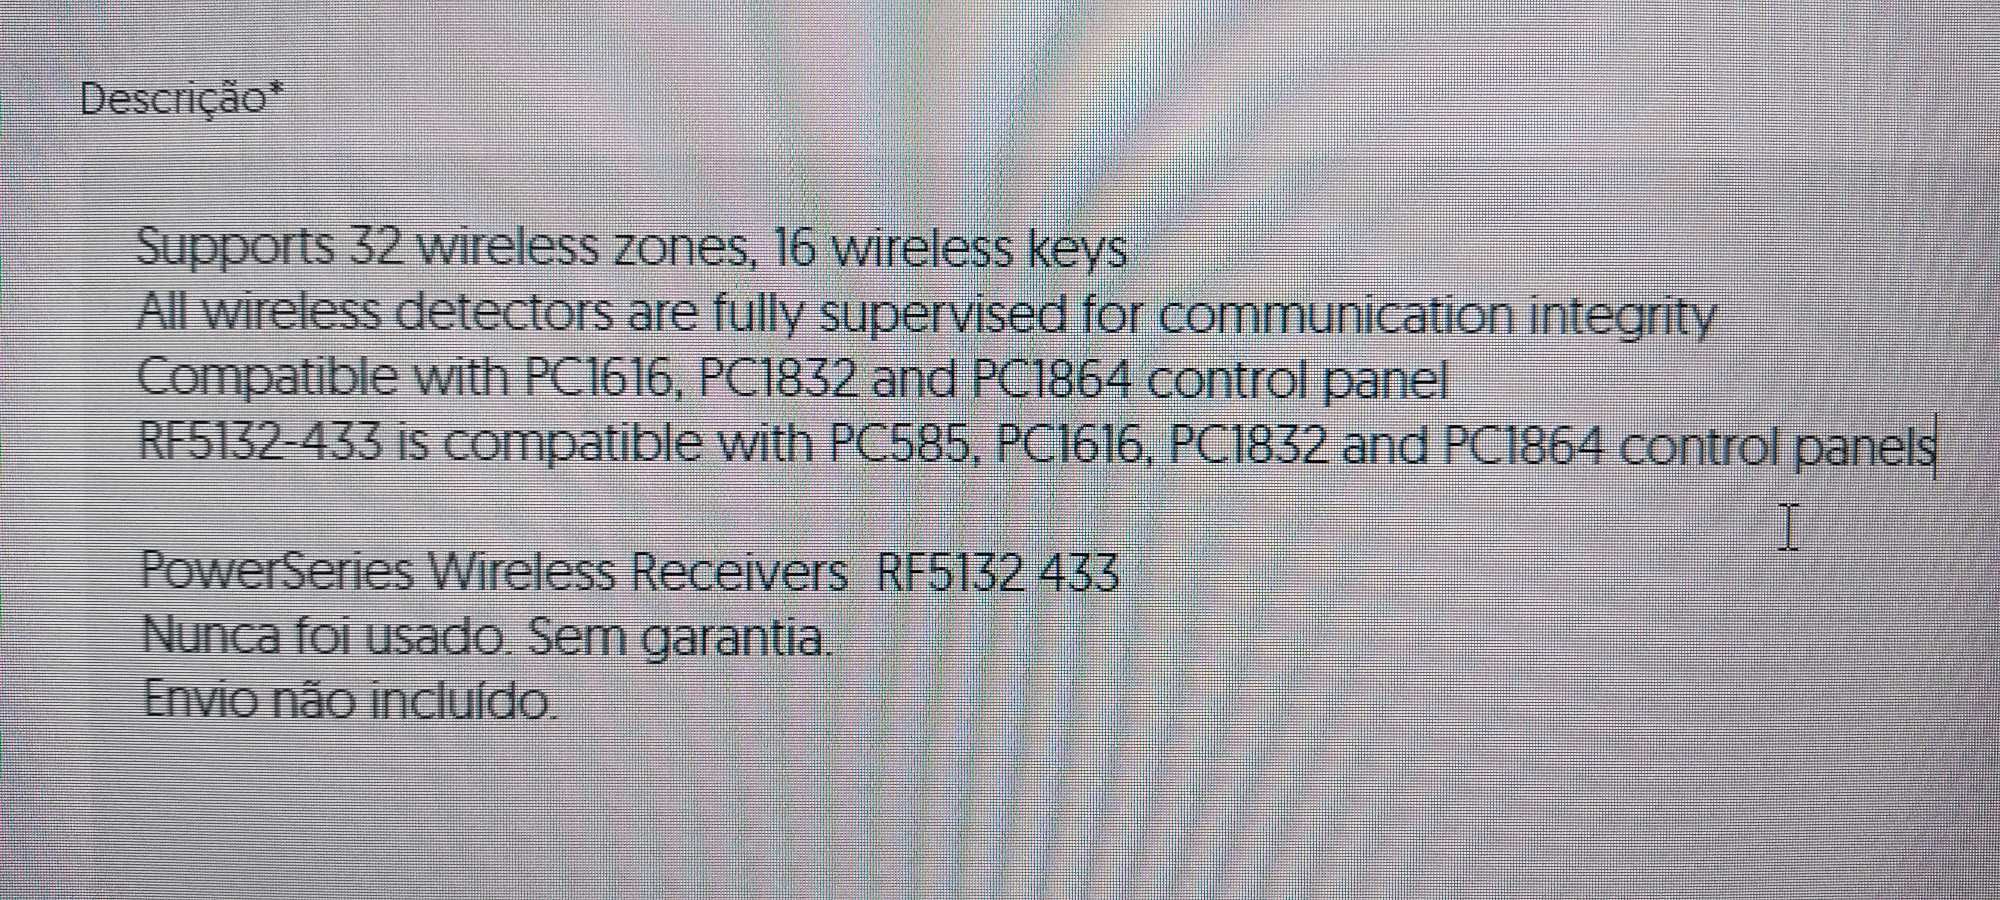 PowerSeries Wireless Receivers